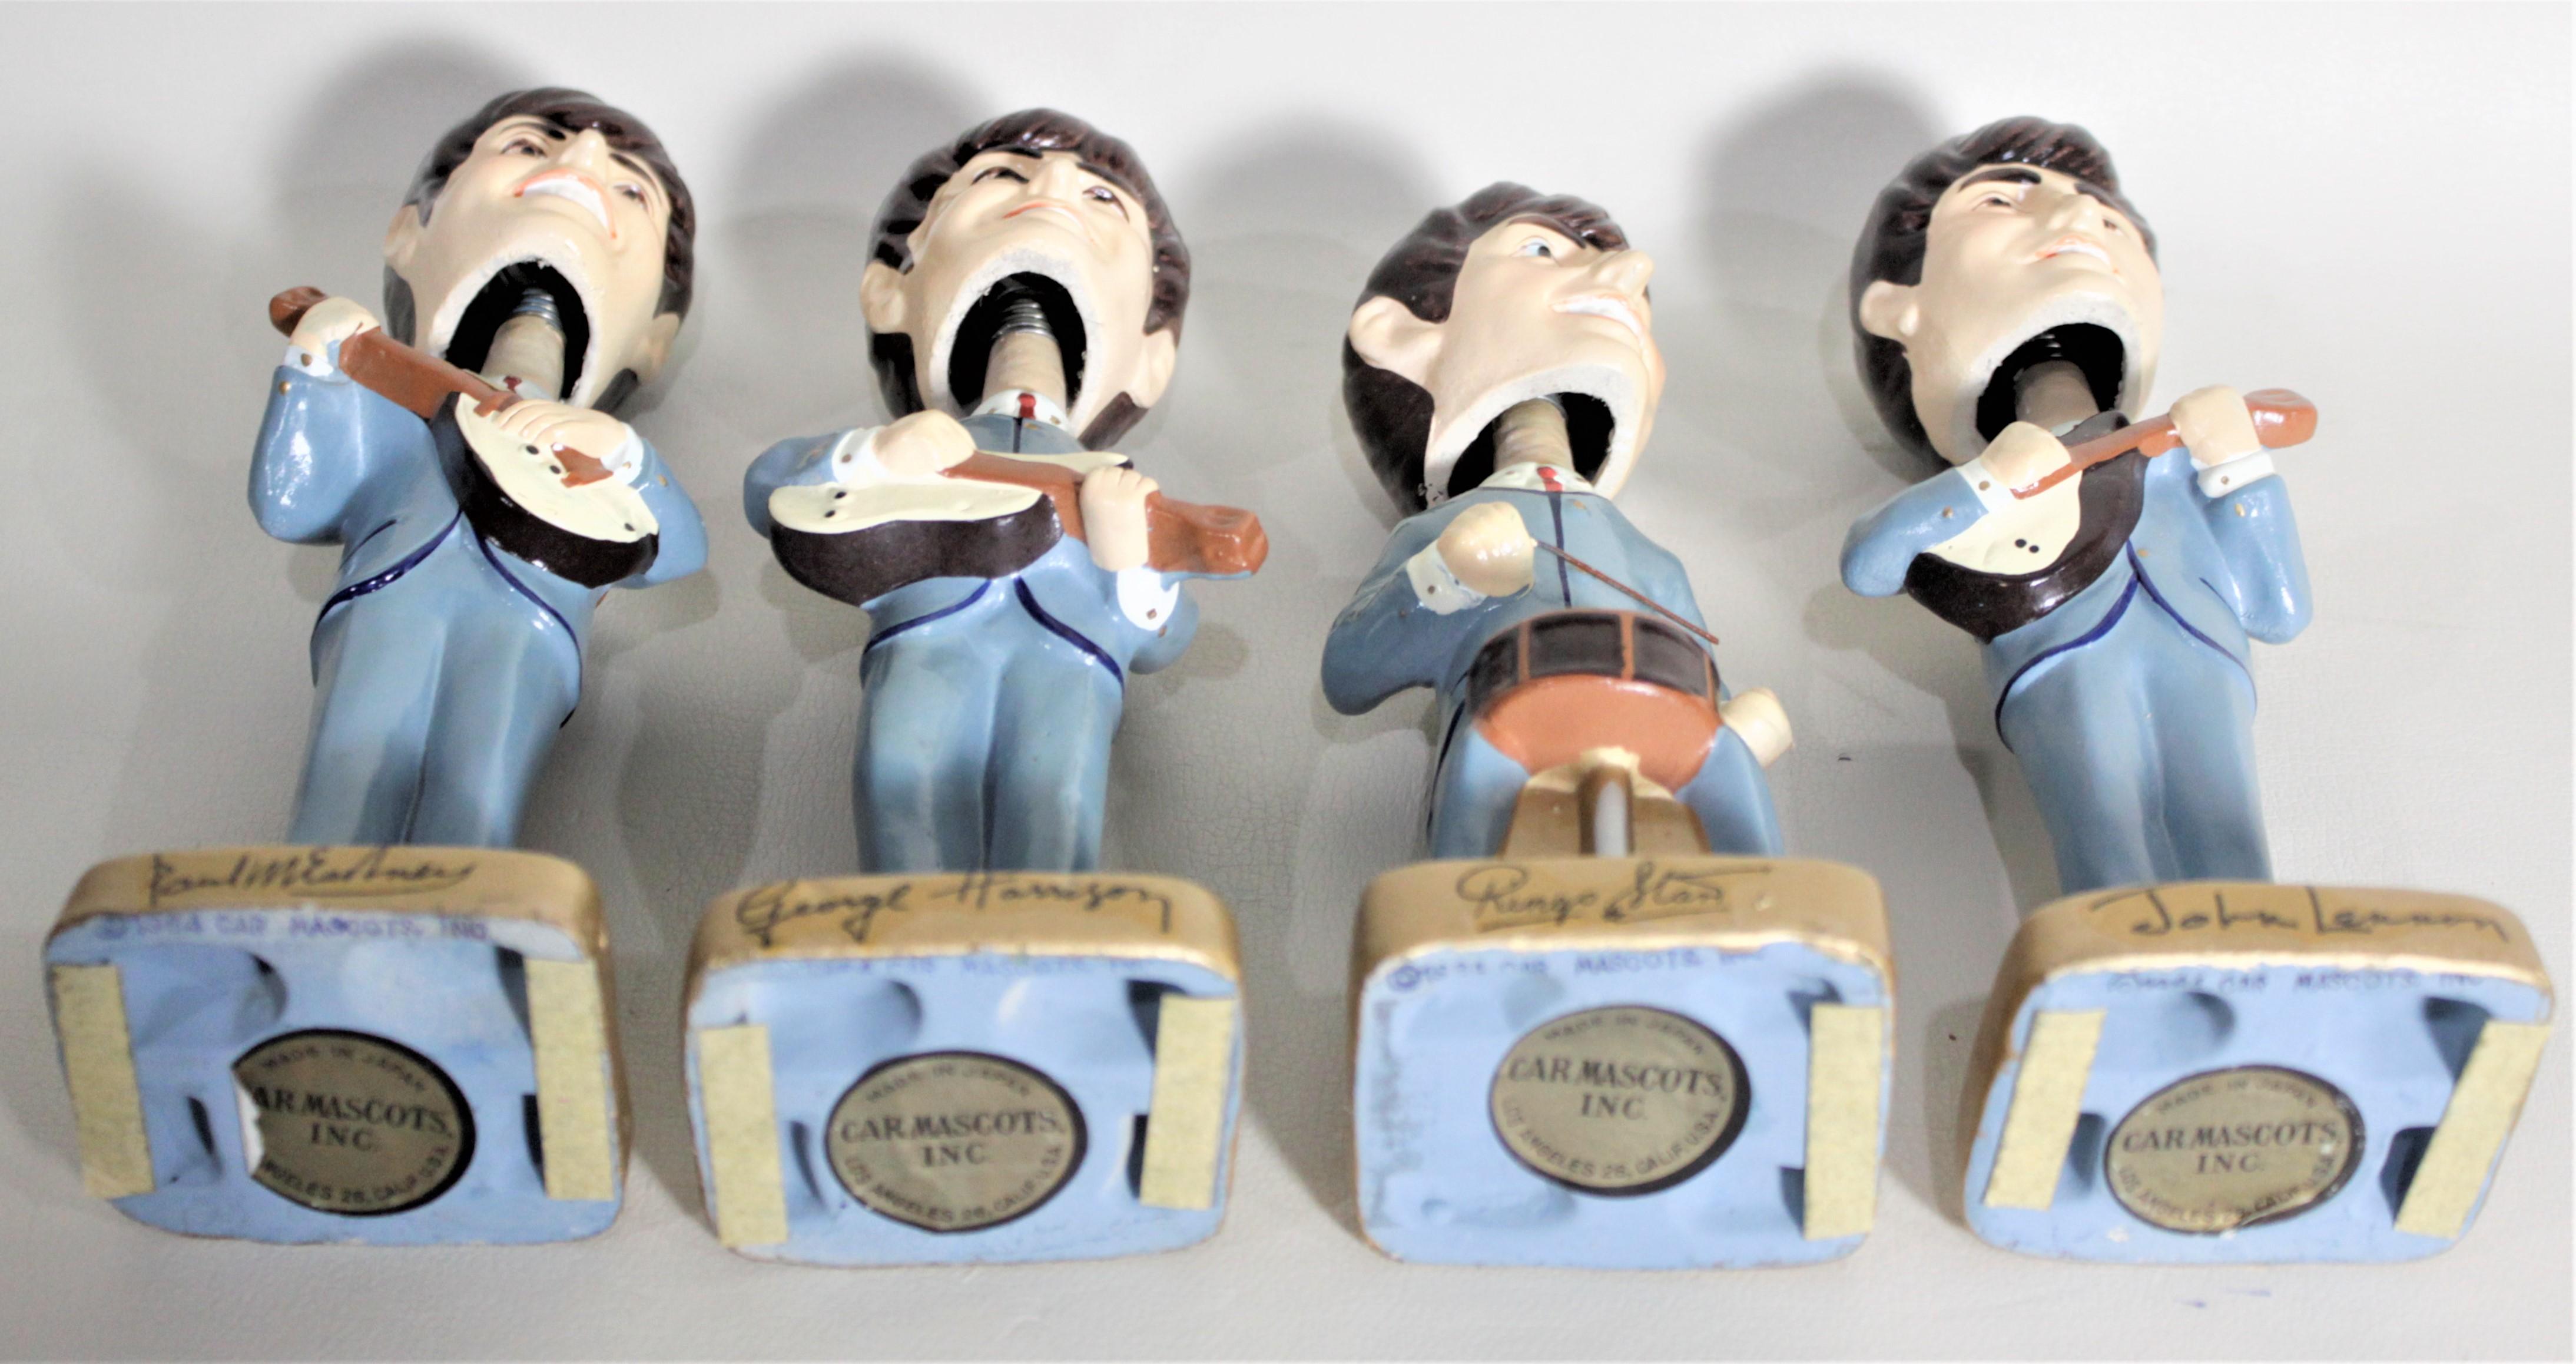 Japanese Original 1964 Beatles Car Mascots Bobblehead Set with Box and Instruction Sheet